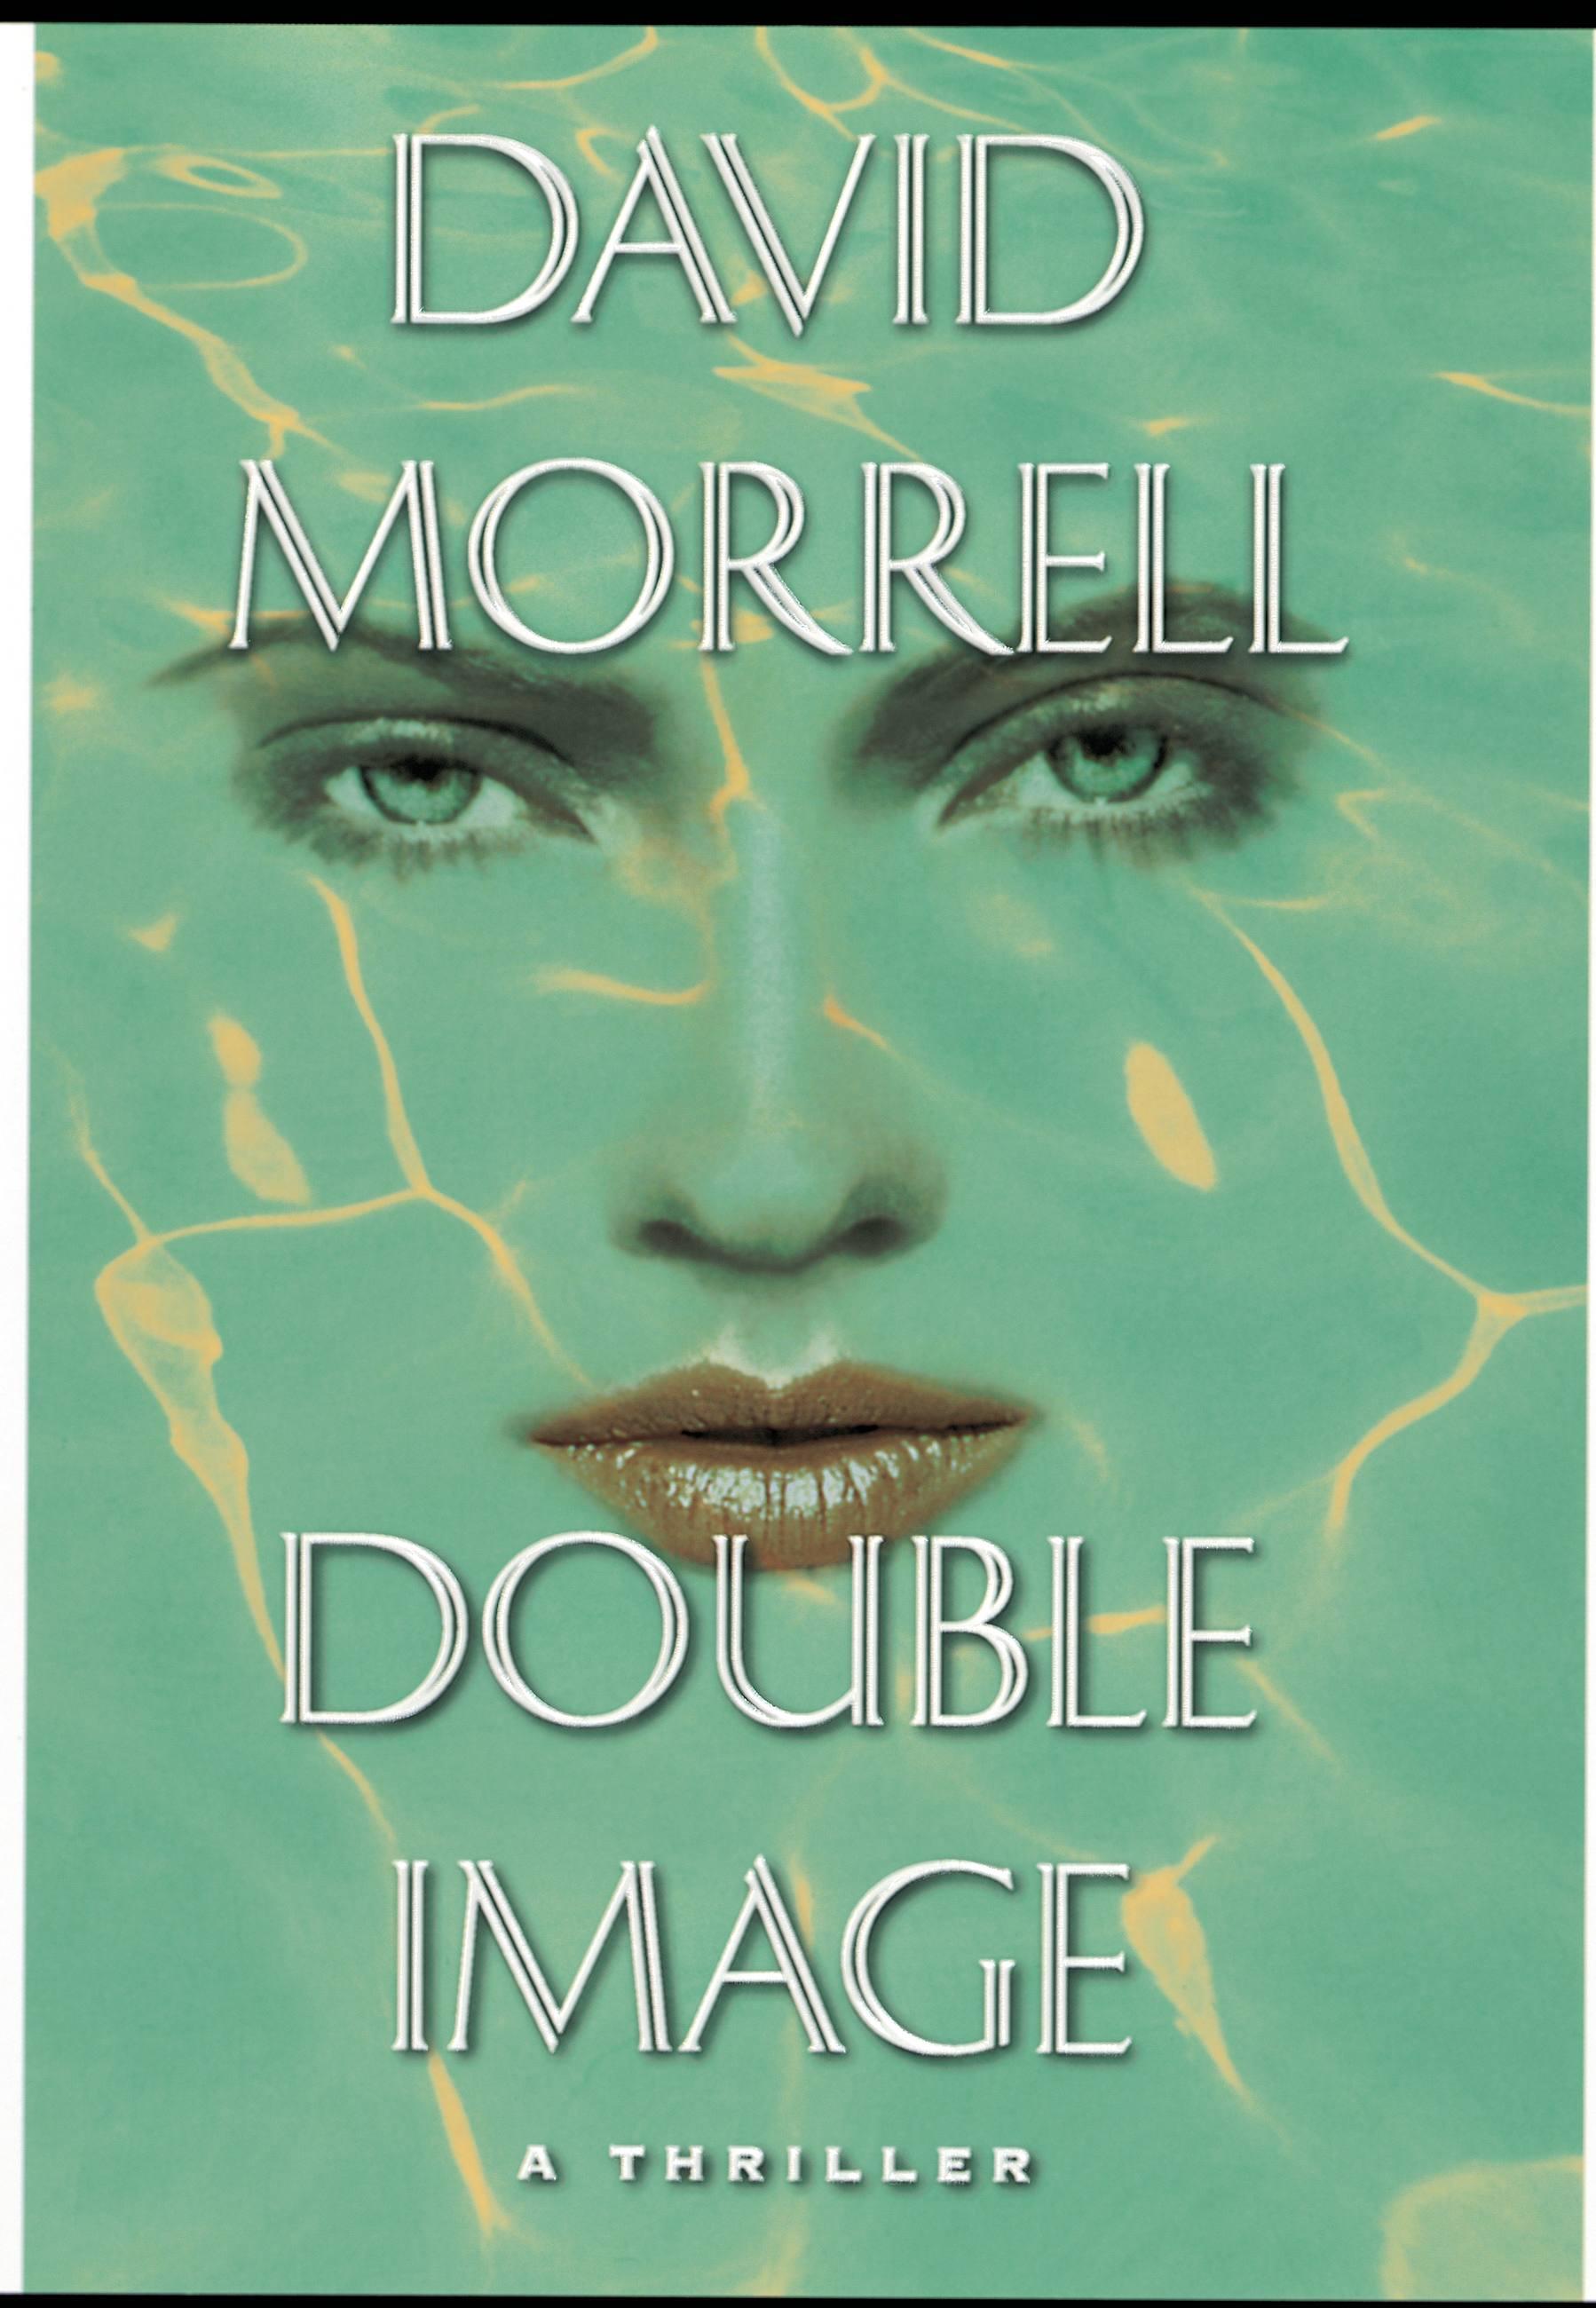 Double Image - Morrell, David